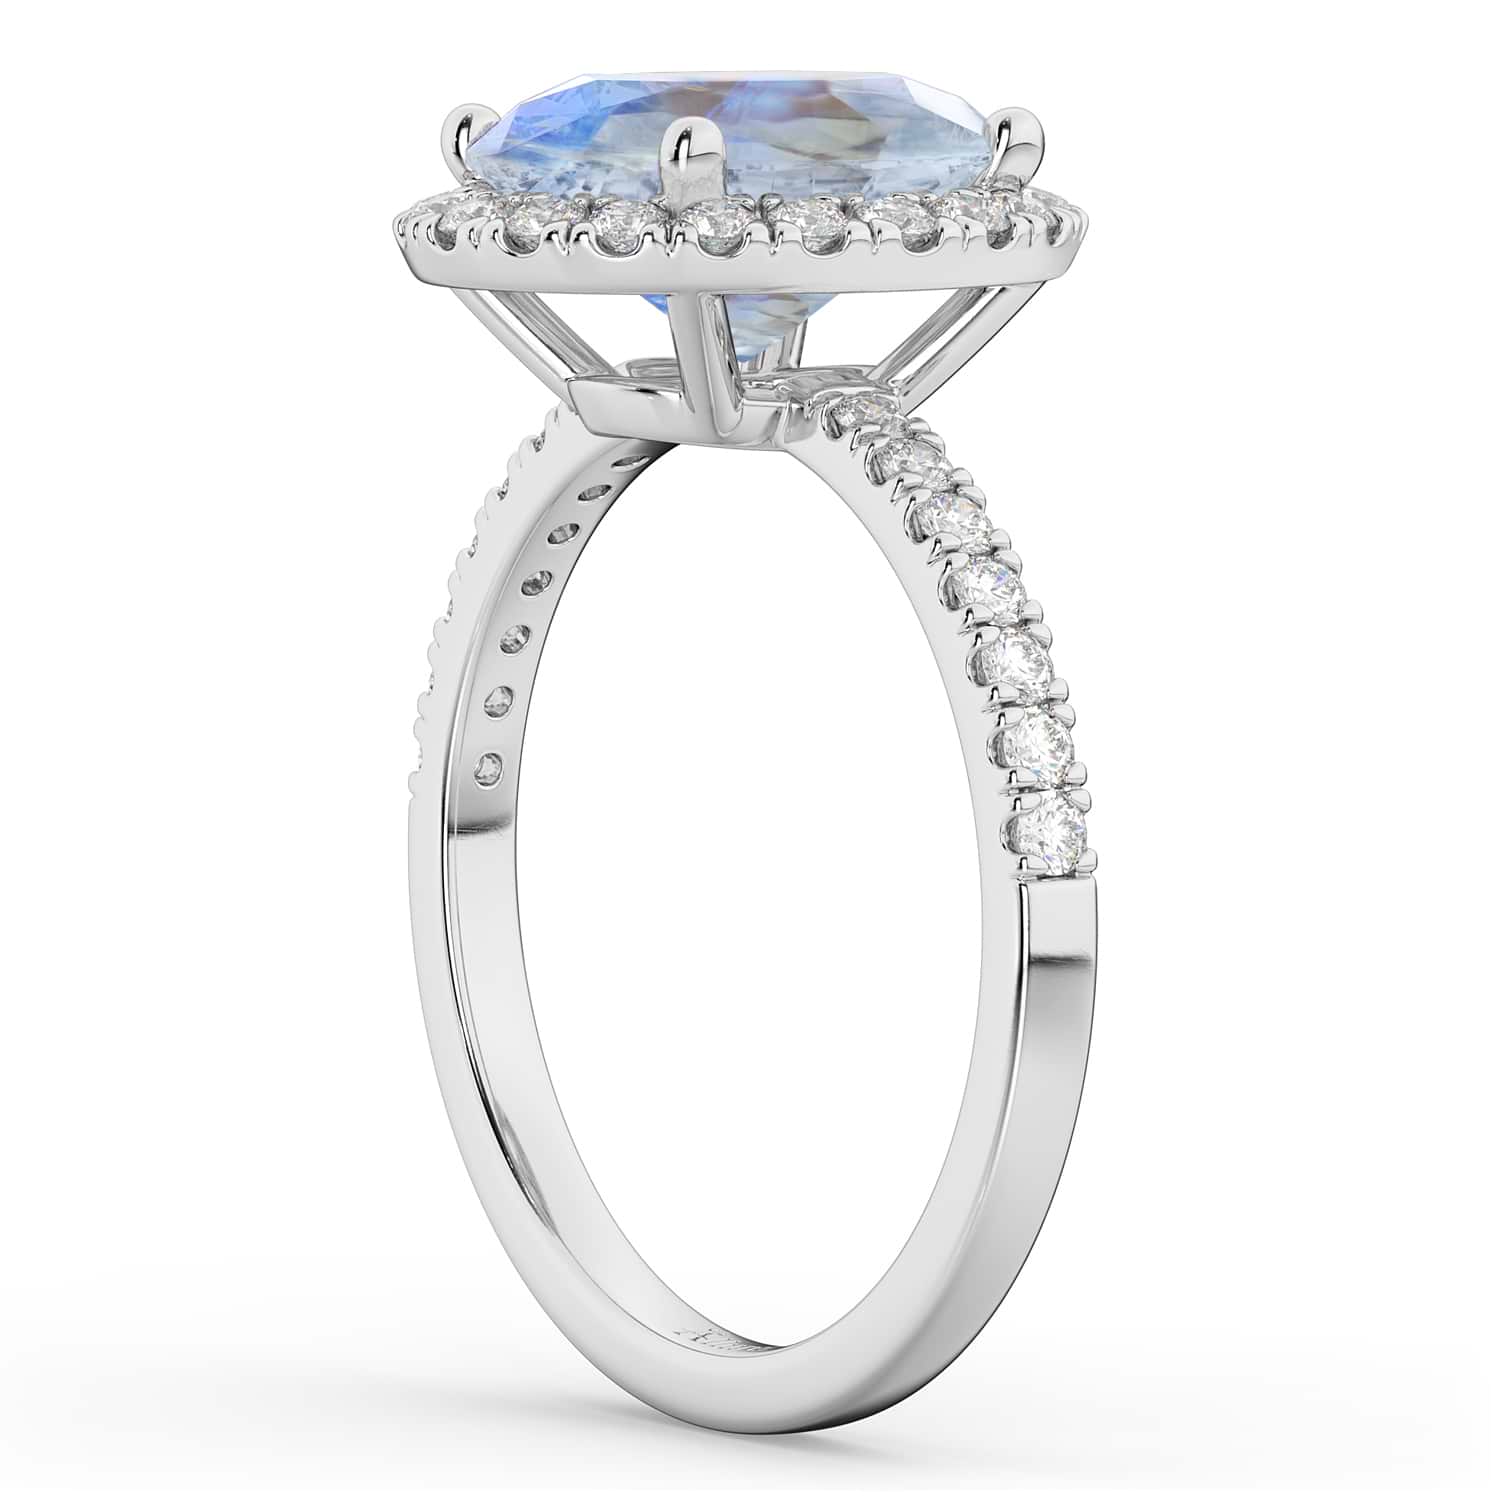 Oval Cut Halo Moonstone & Diamond Engagement Ring 14K White Gold 3.31ct